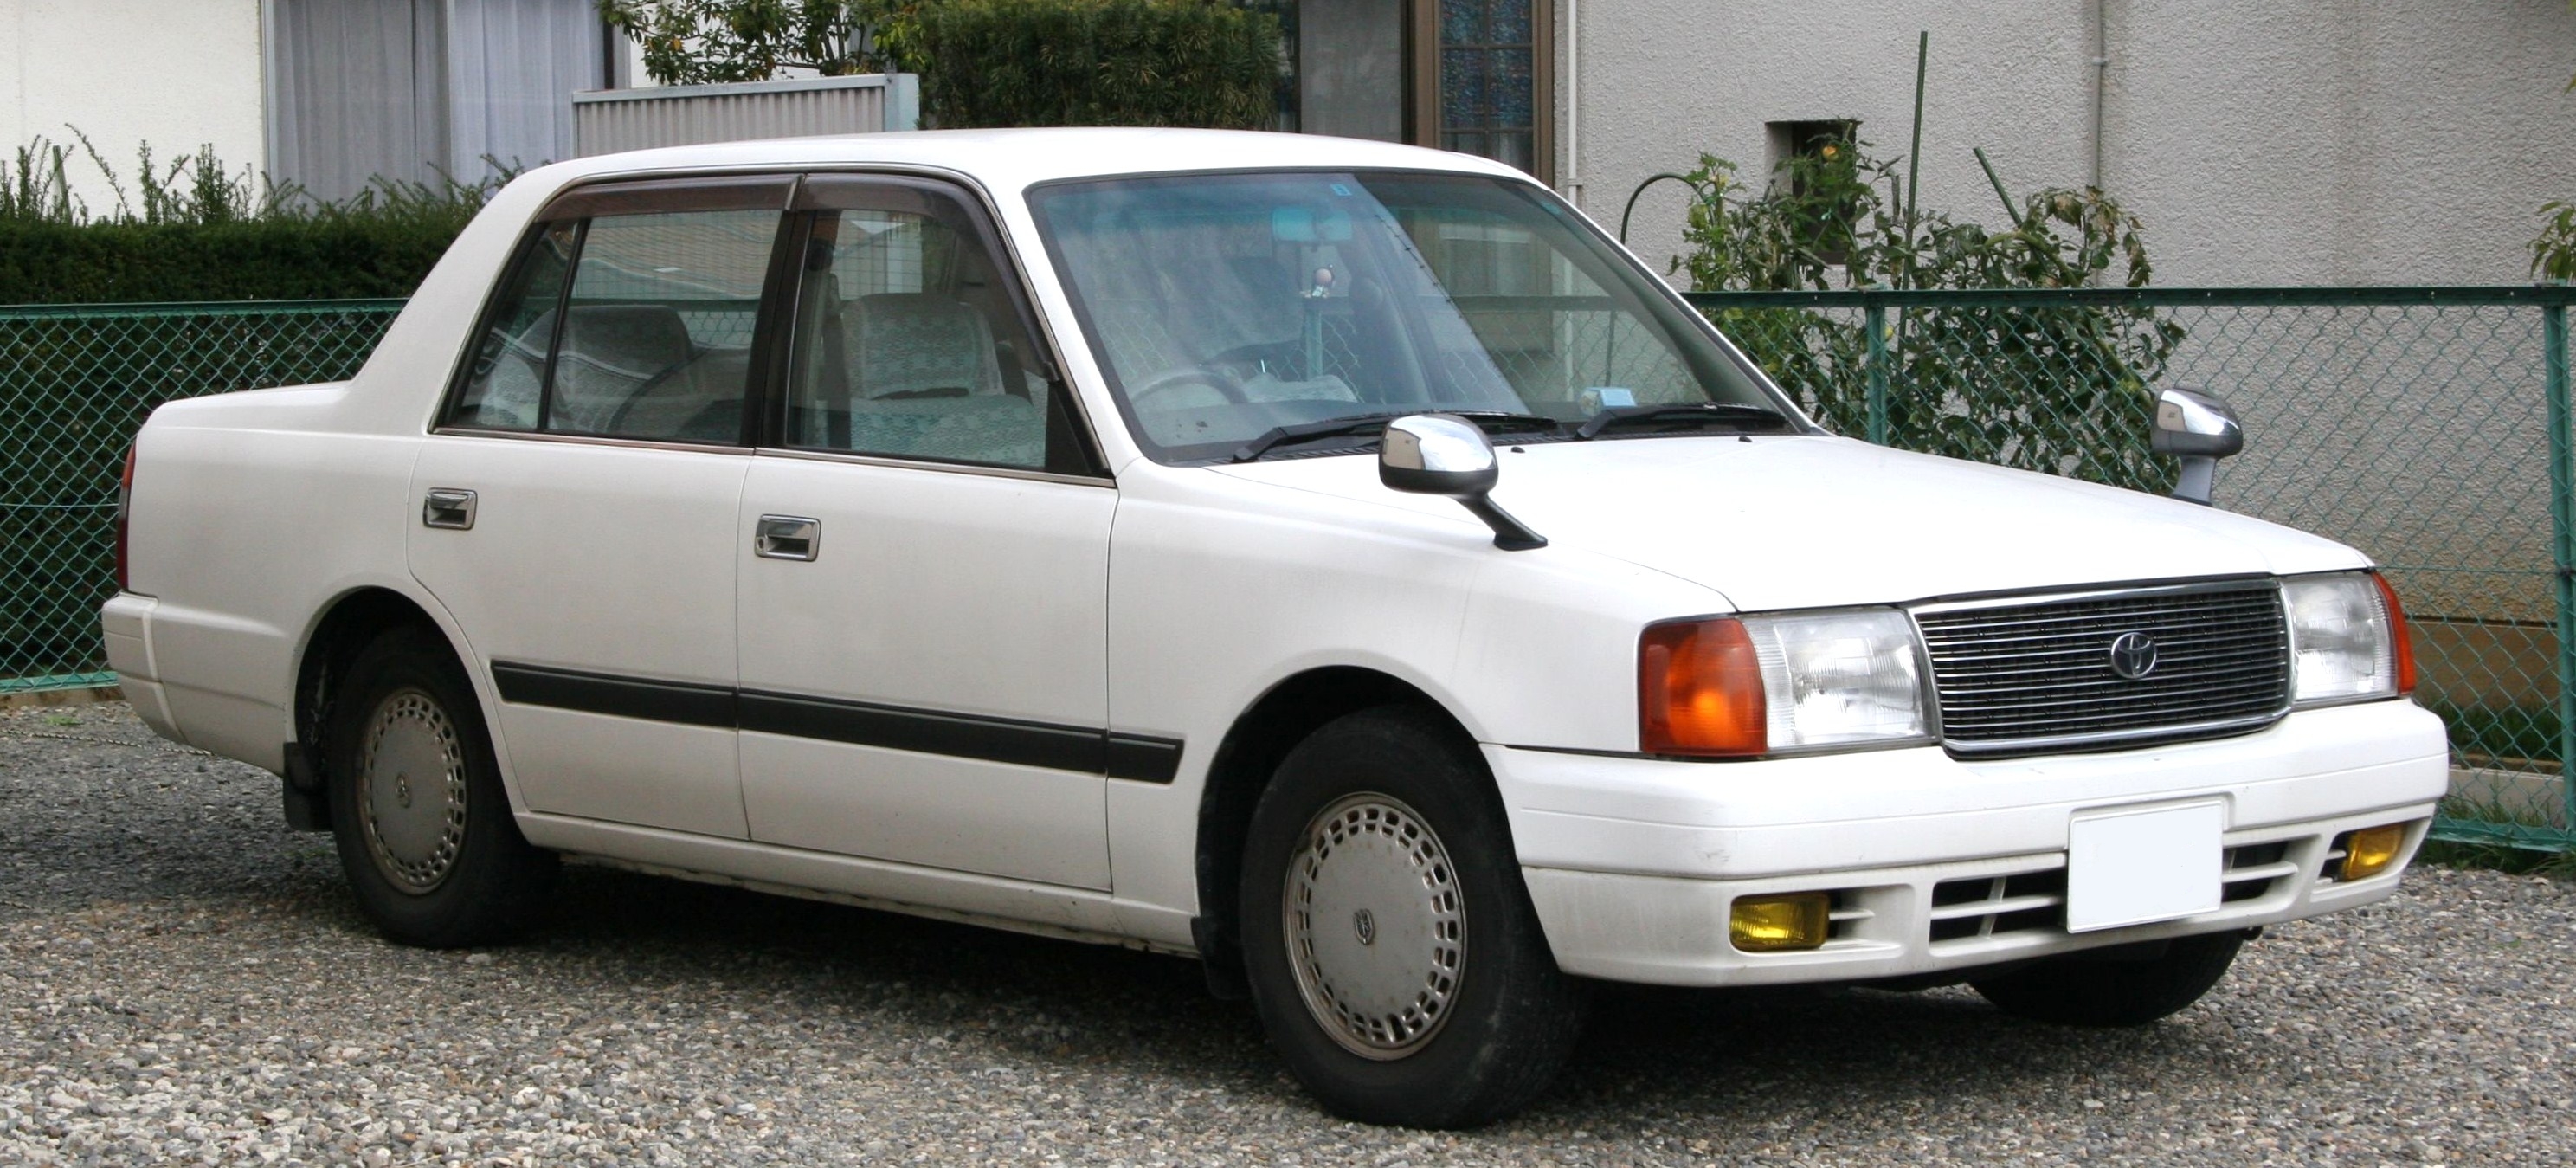 Toyota Comfort Wikipedia